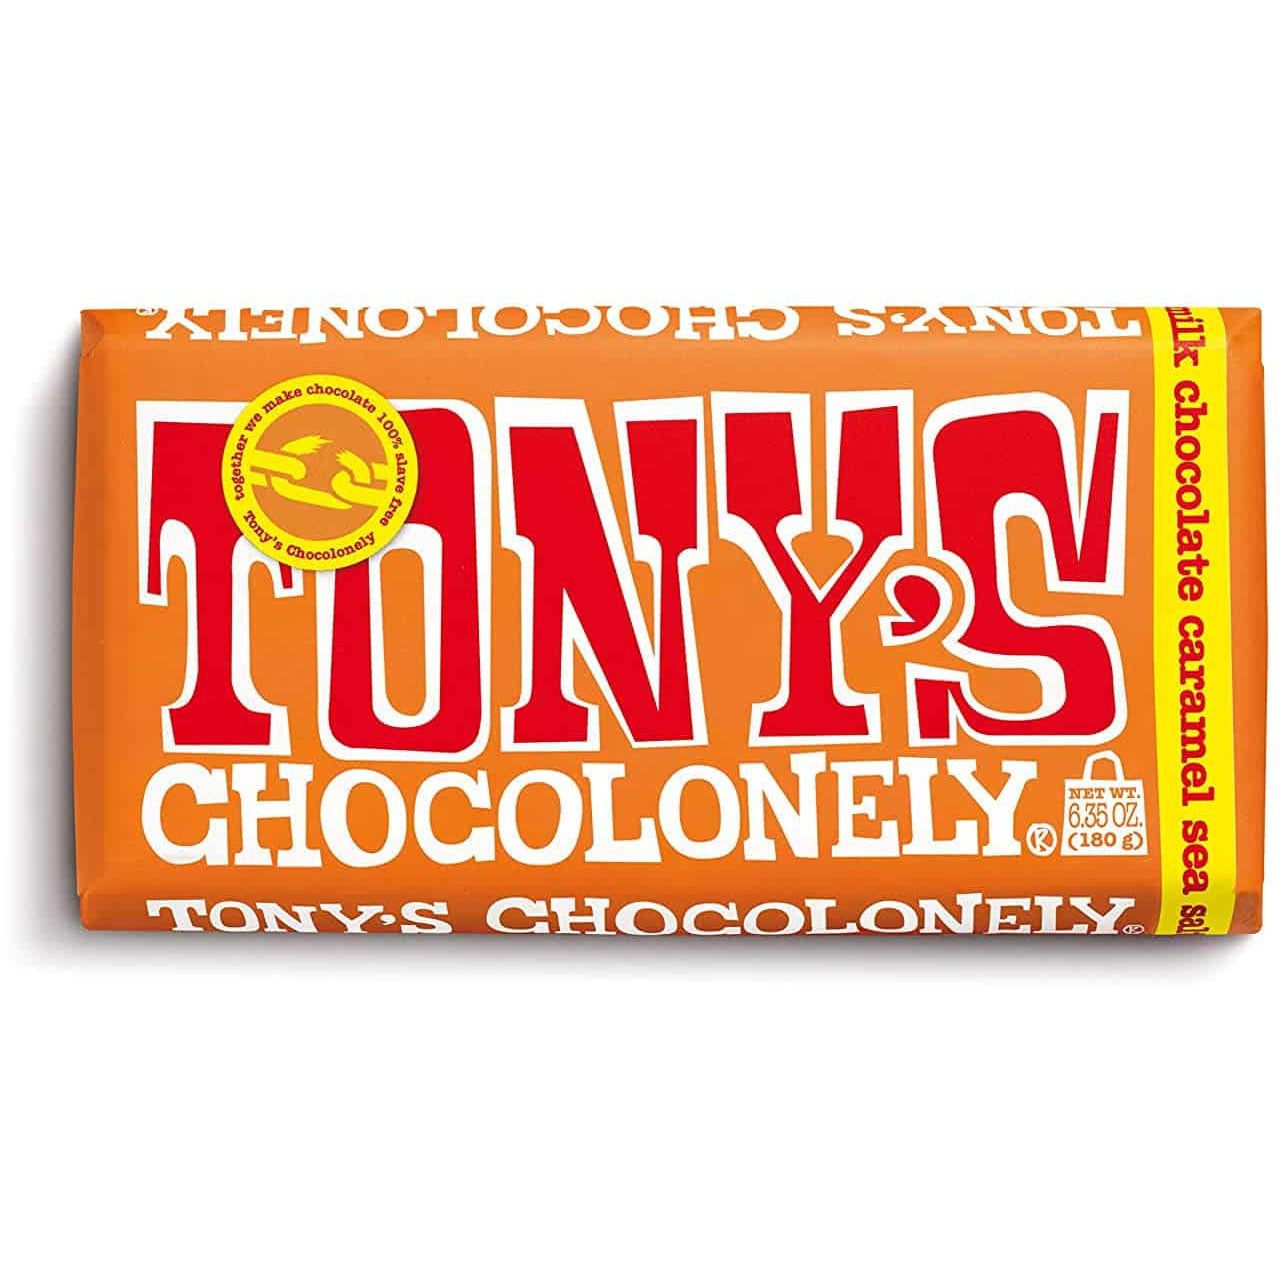 Tony's Chocolonely 32% Milk Chocolate Bar with Caramel and Sea Salt, 6.35 Ounce